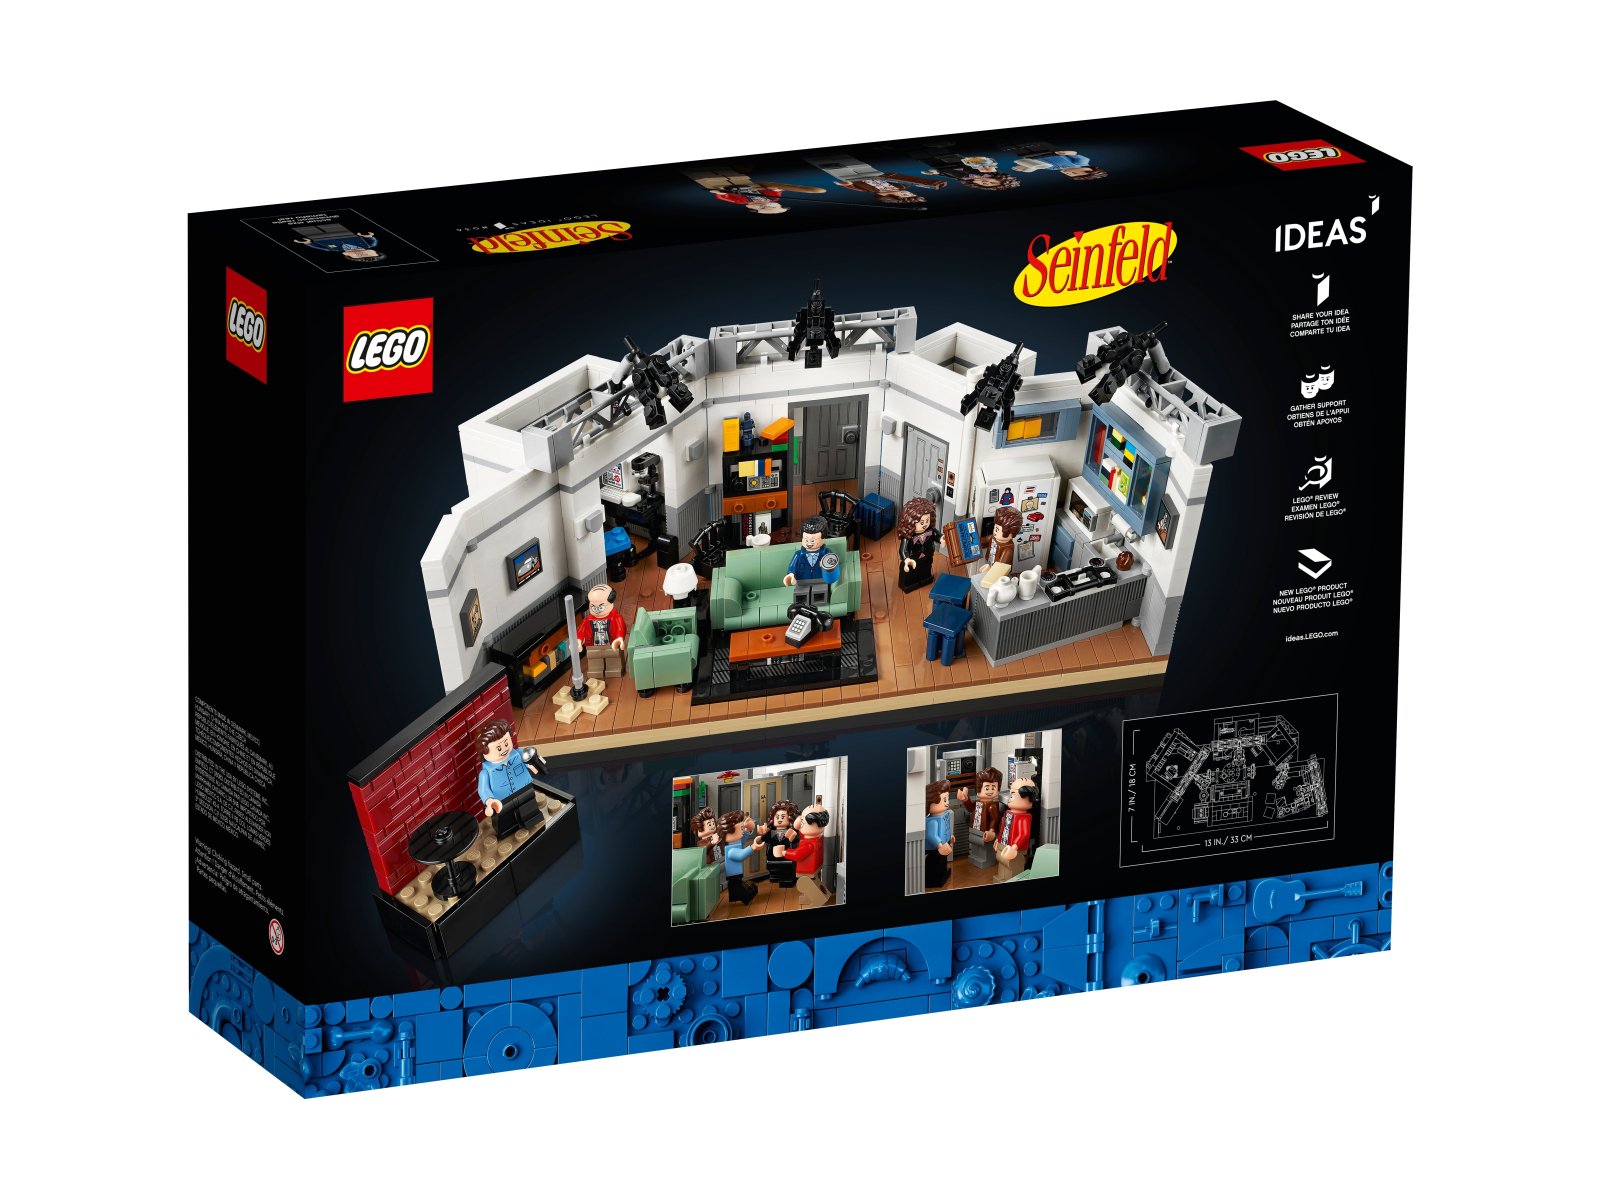 LEGO 21328 Ideas Seinfeld